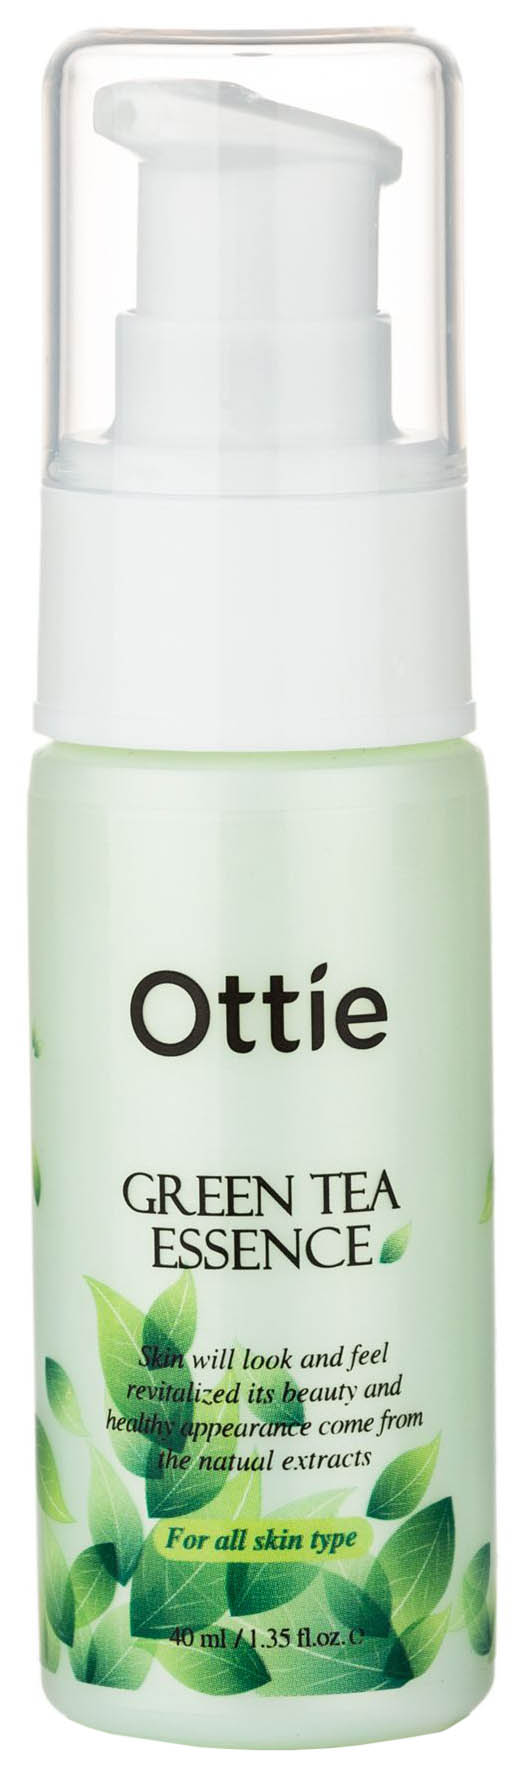 Сыворотка для лица Ottie Green Tea Essence bio textiles халат женский green